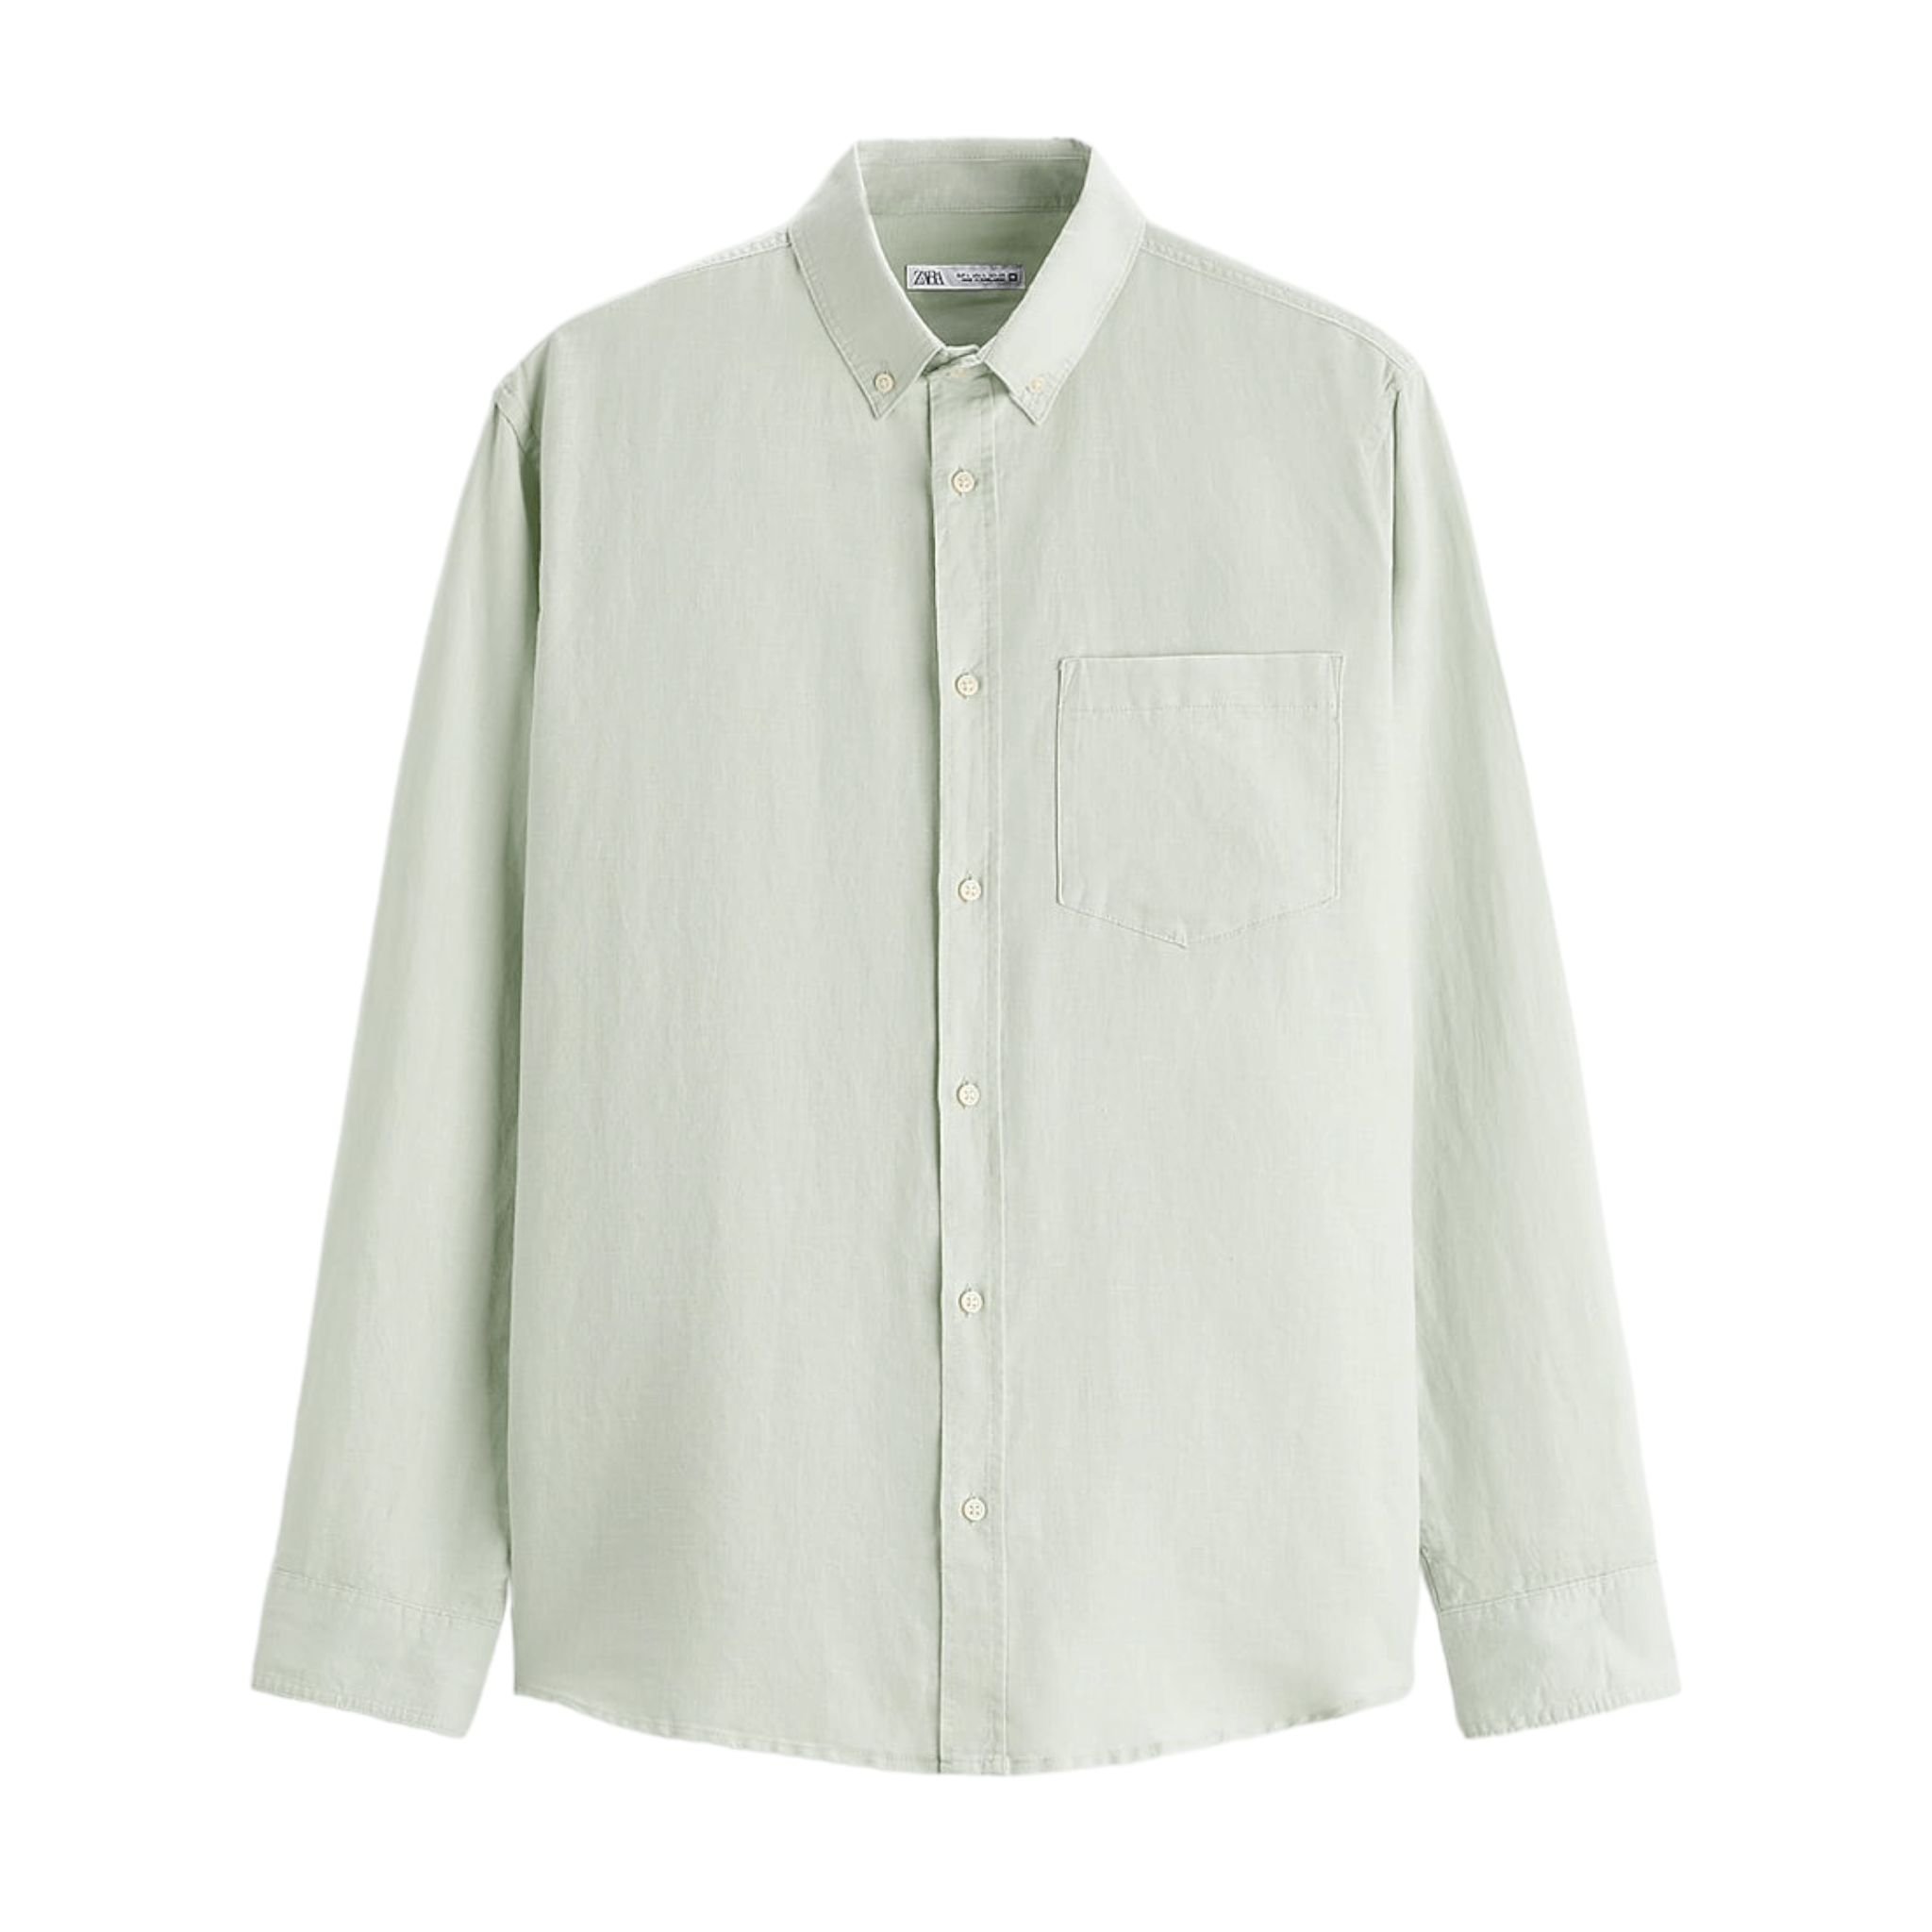 Рубашка Zara Cotton - Linen, светло-зеленый рубашка zara cotton linen фиолетово коричневый